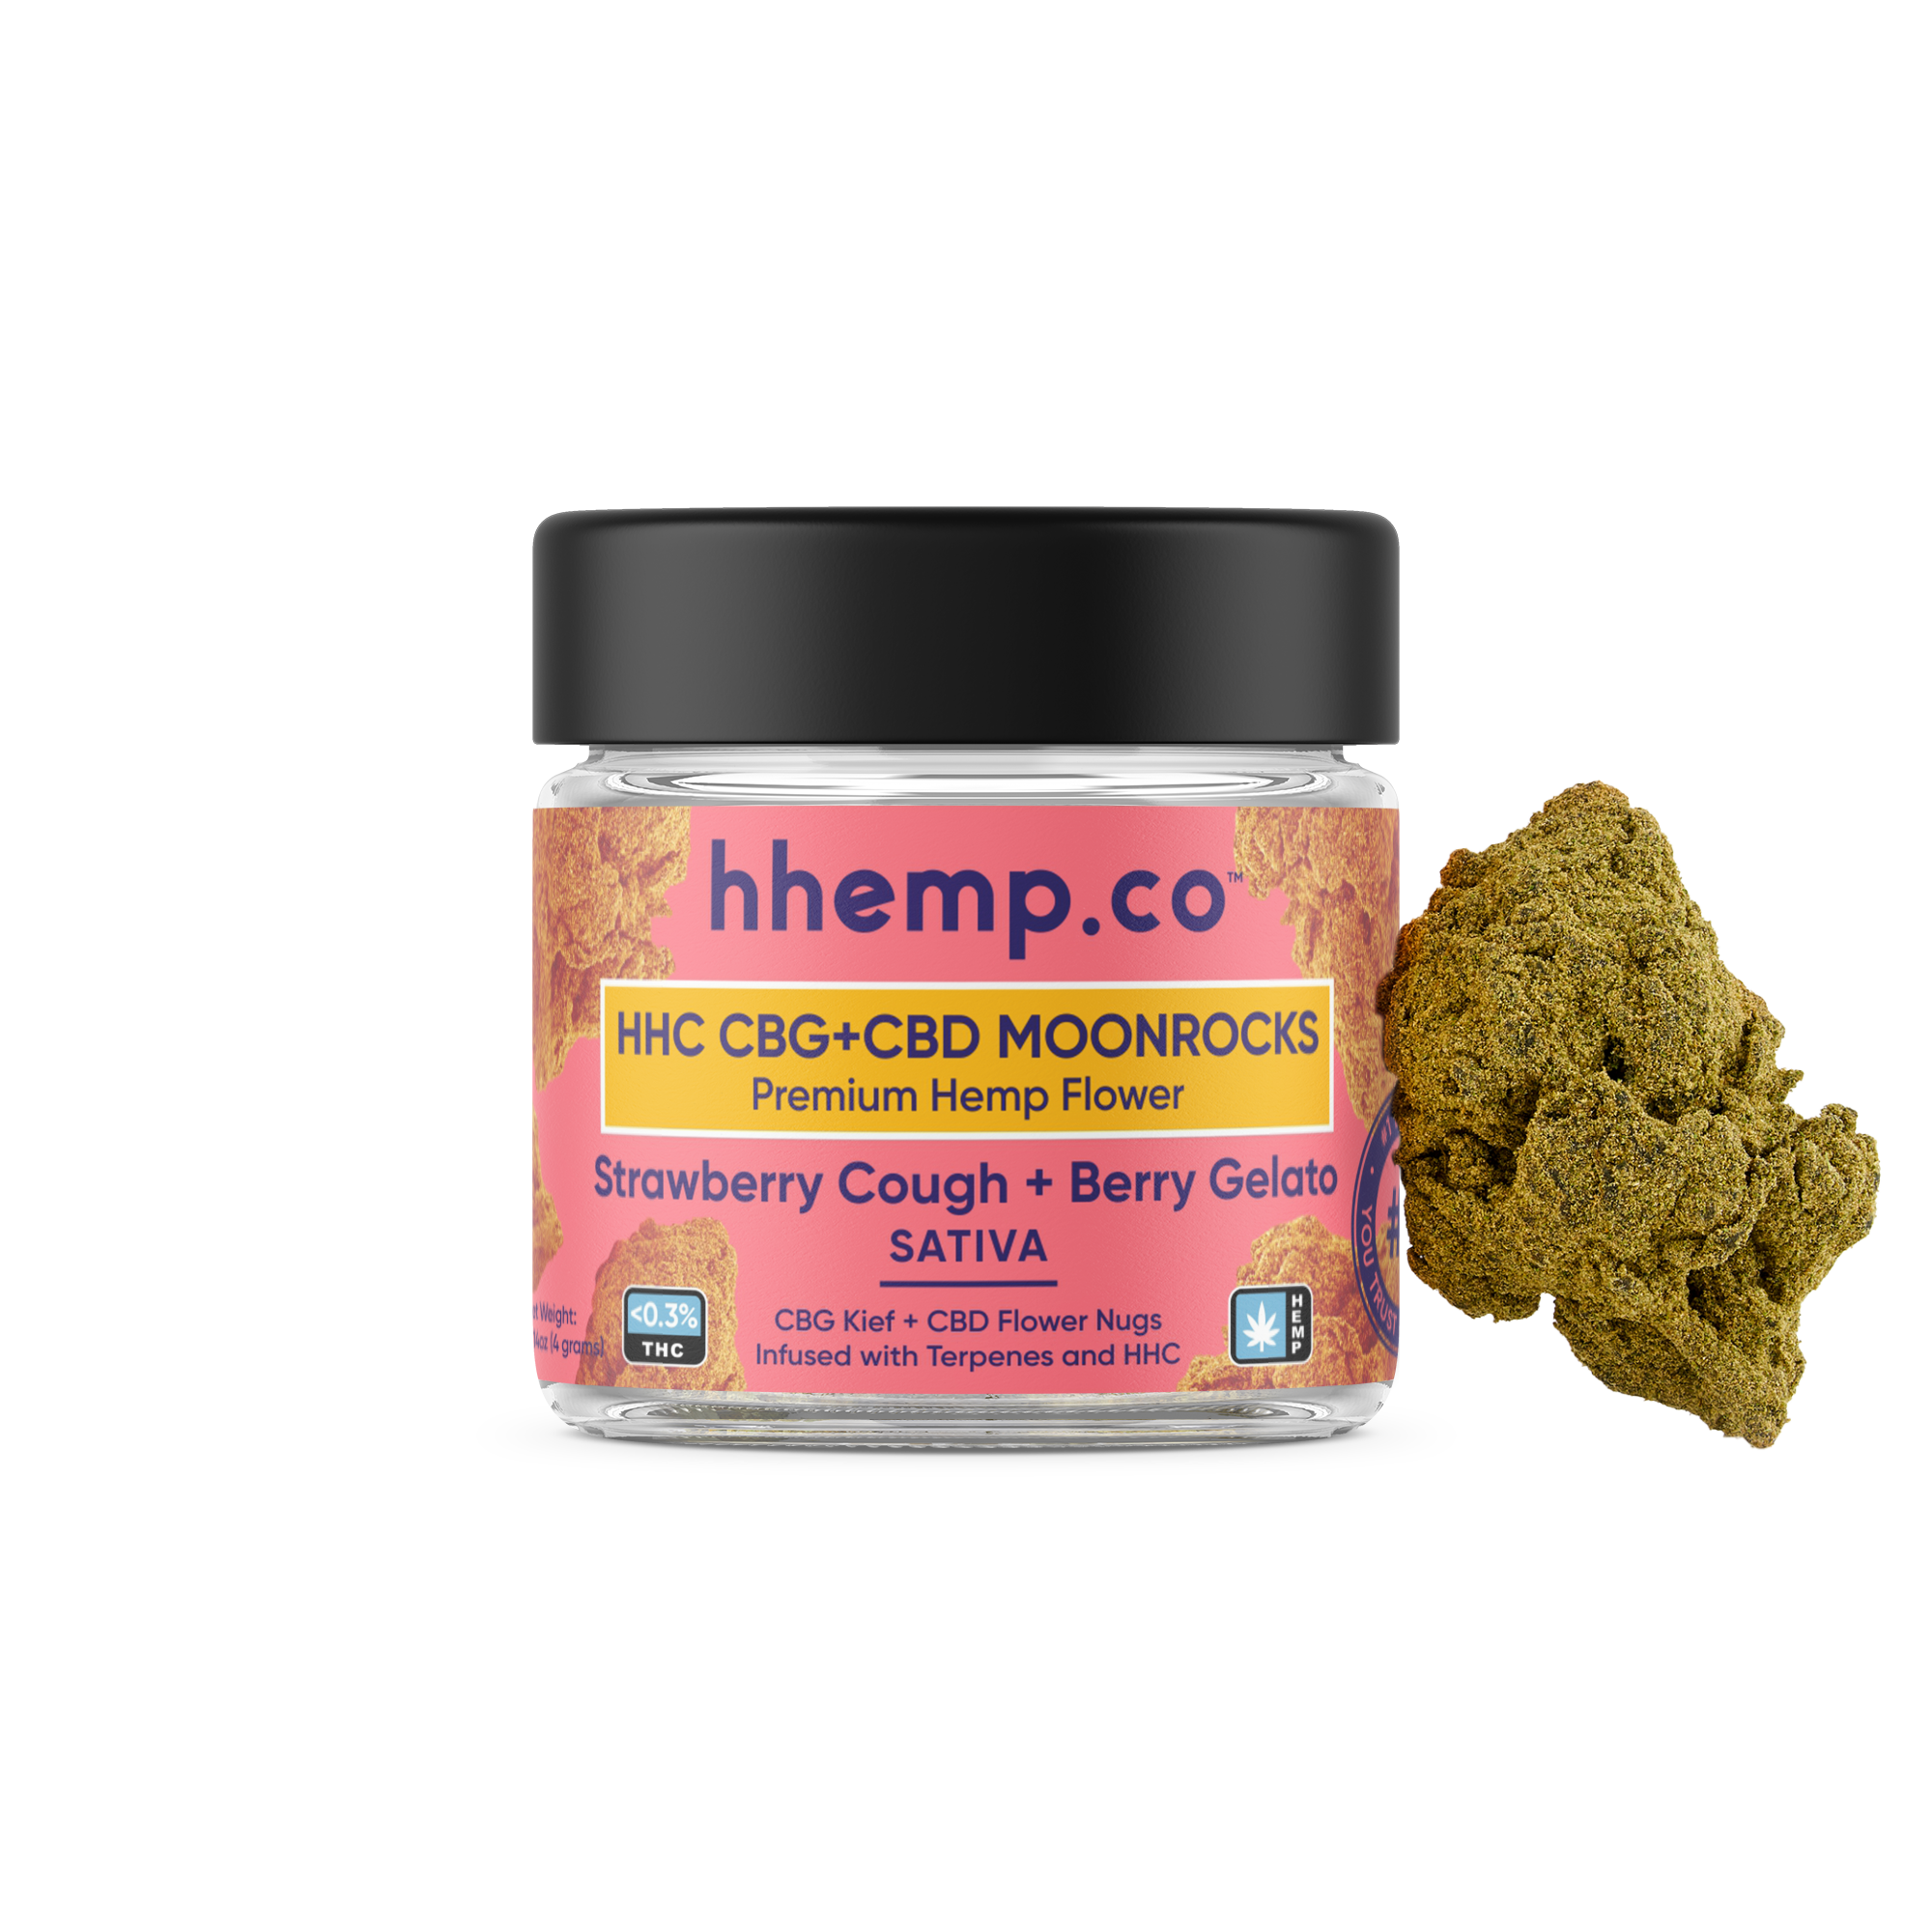 hhemp.co HHC Moonrock Flower - Strawberry Cough+Berry Gelato (Sativa)